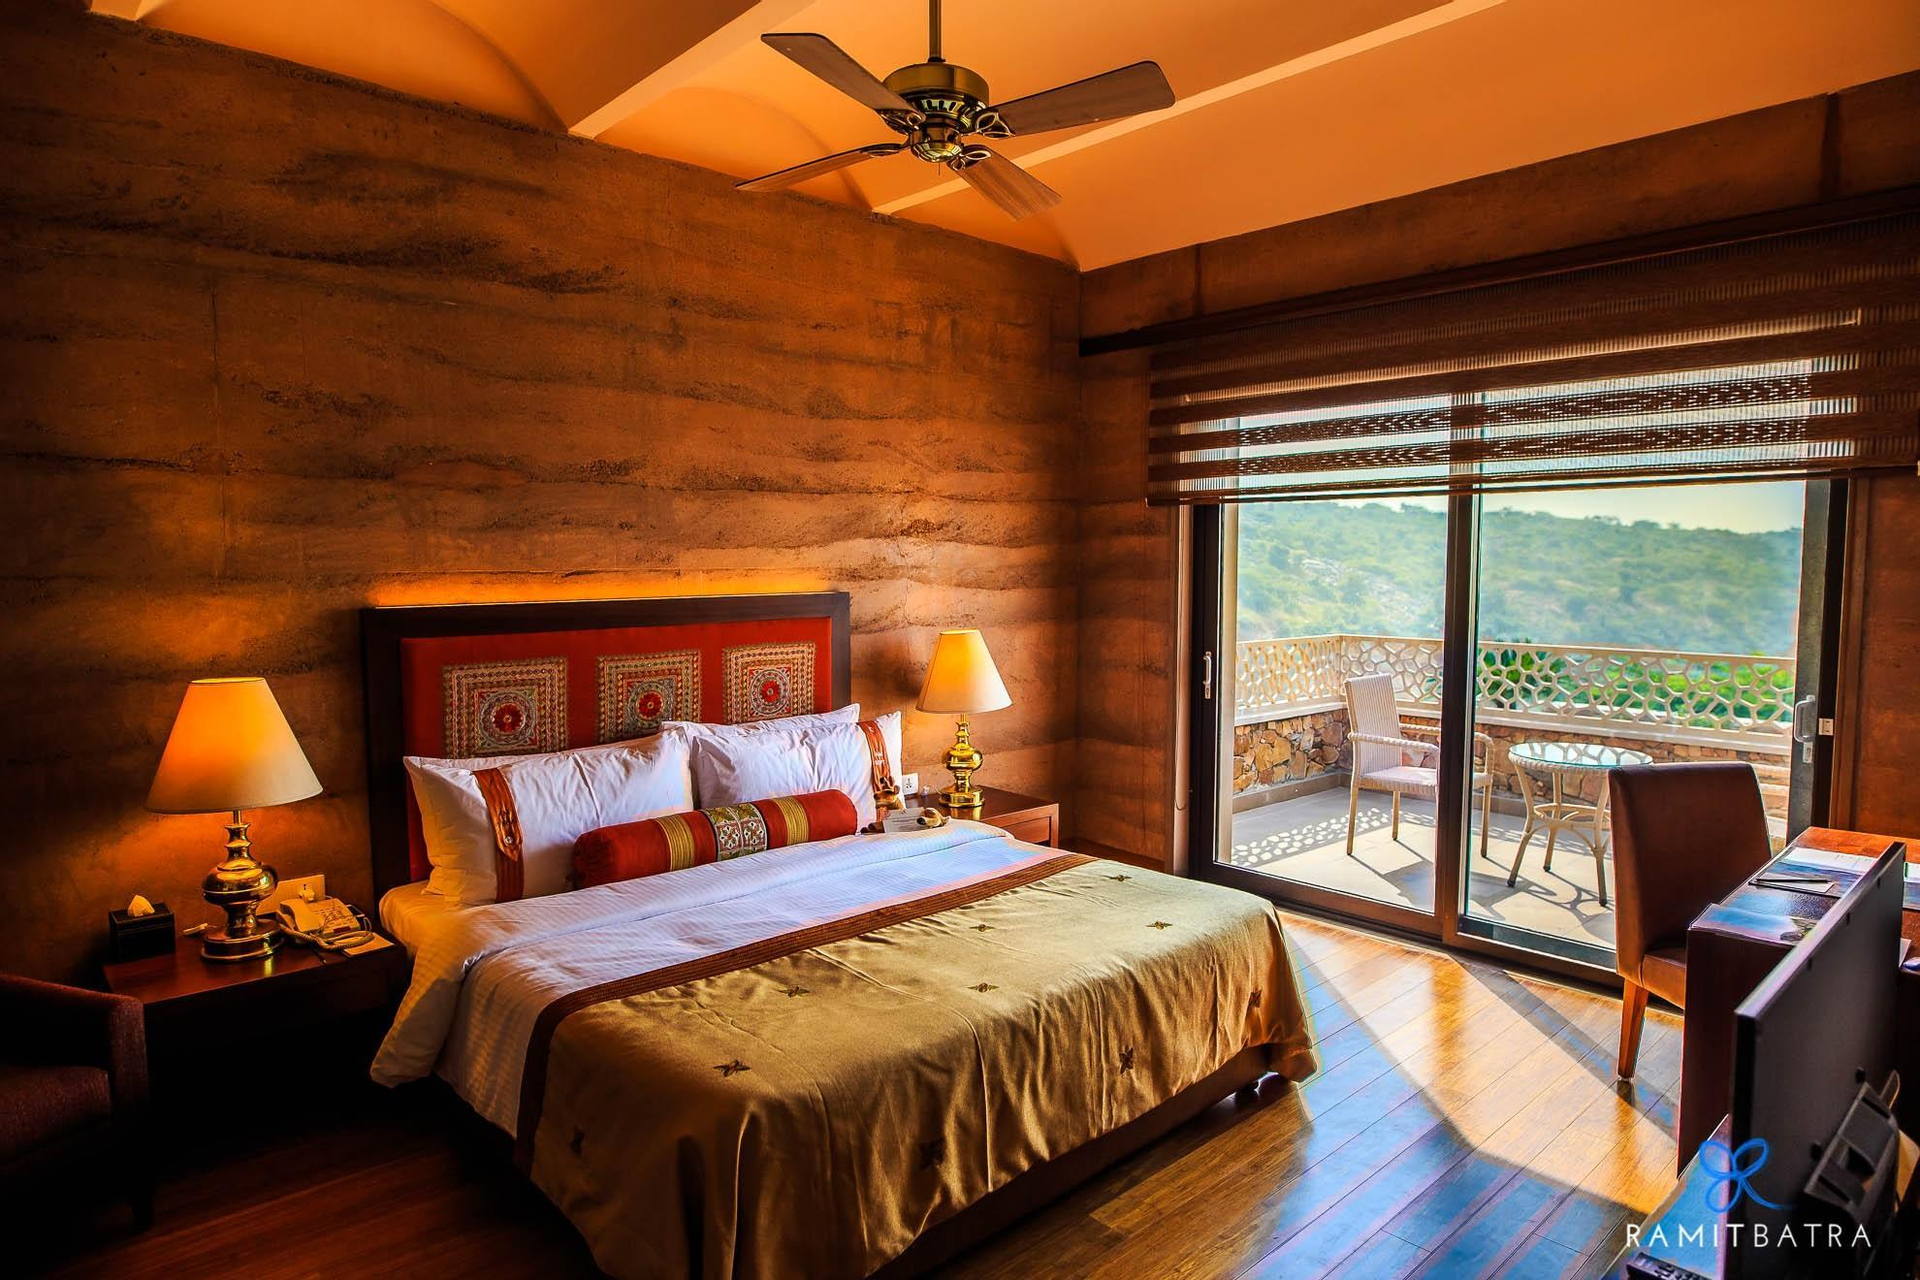 Bedroom, The Lalit Mangar, Faridabad